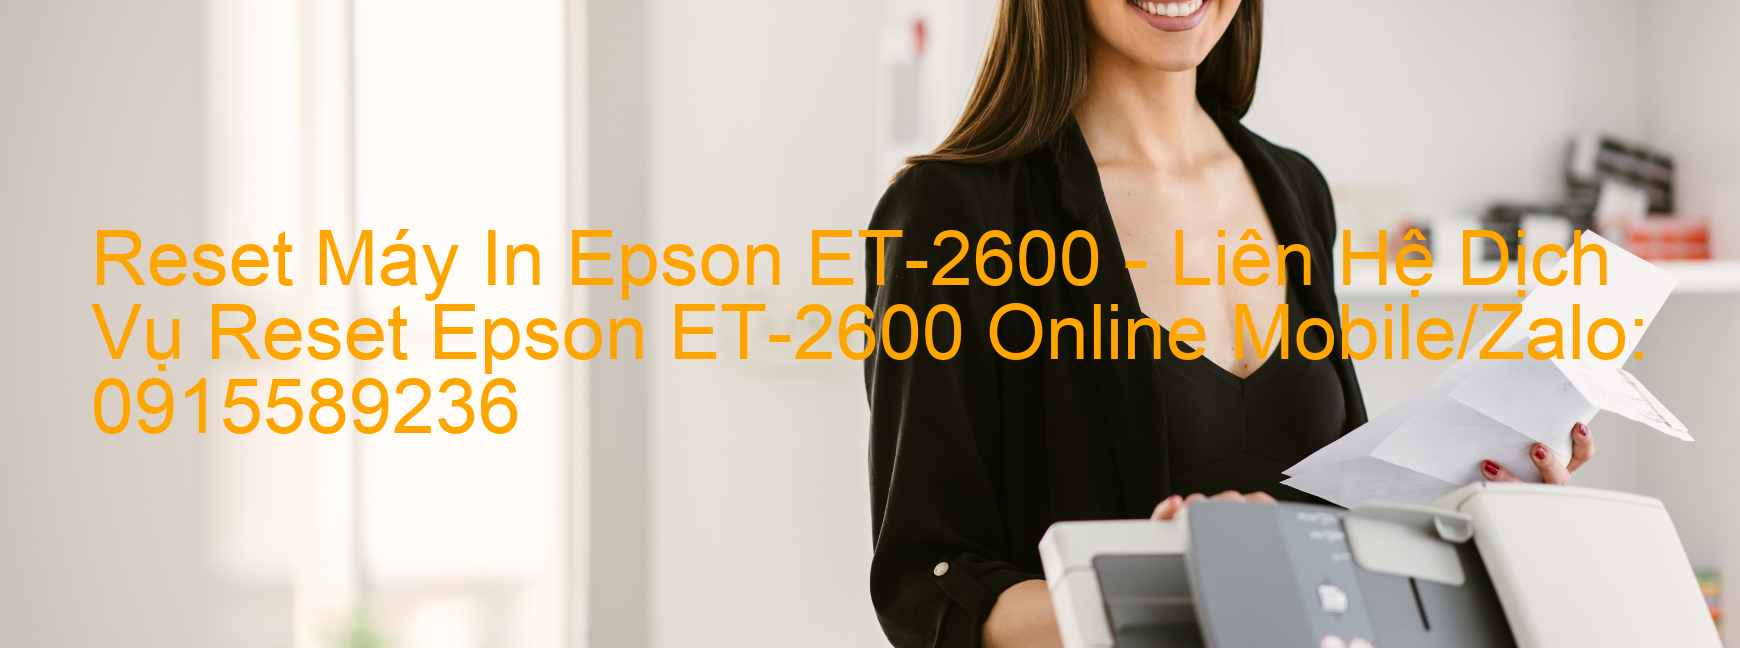 Reset Máy In Epson ET-2600 Online